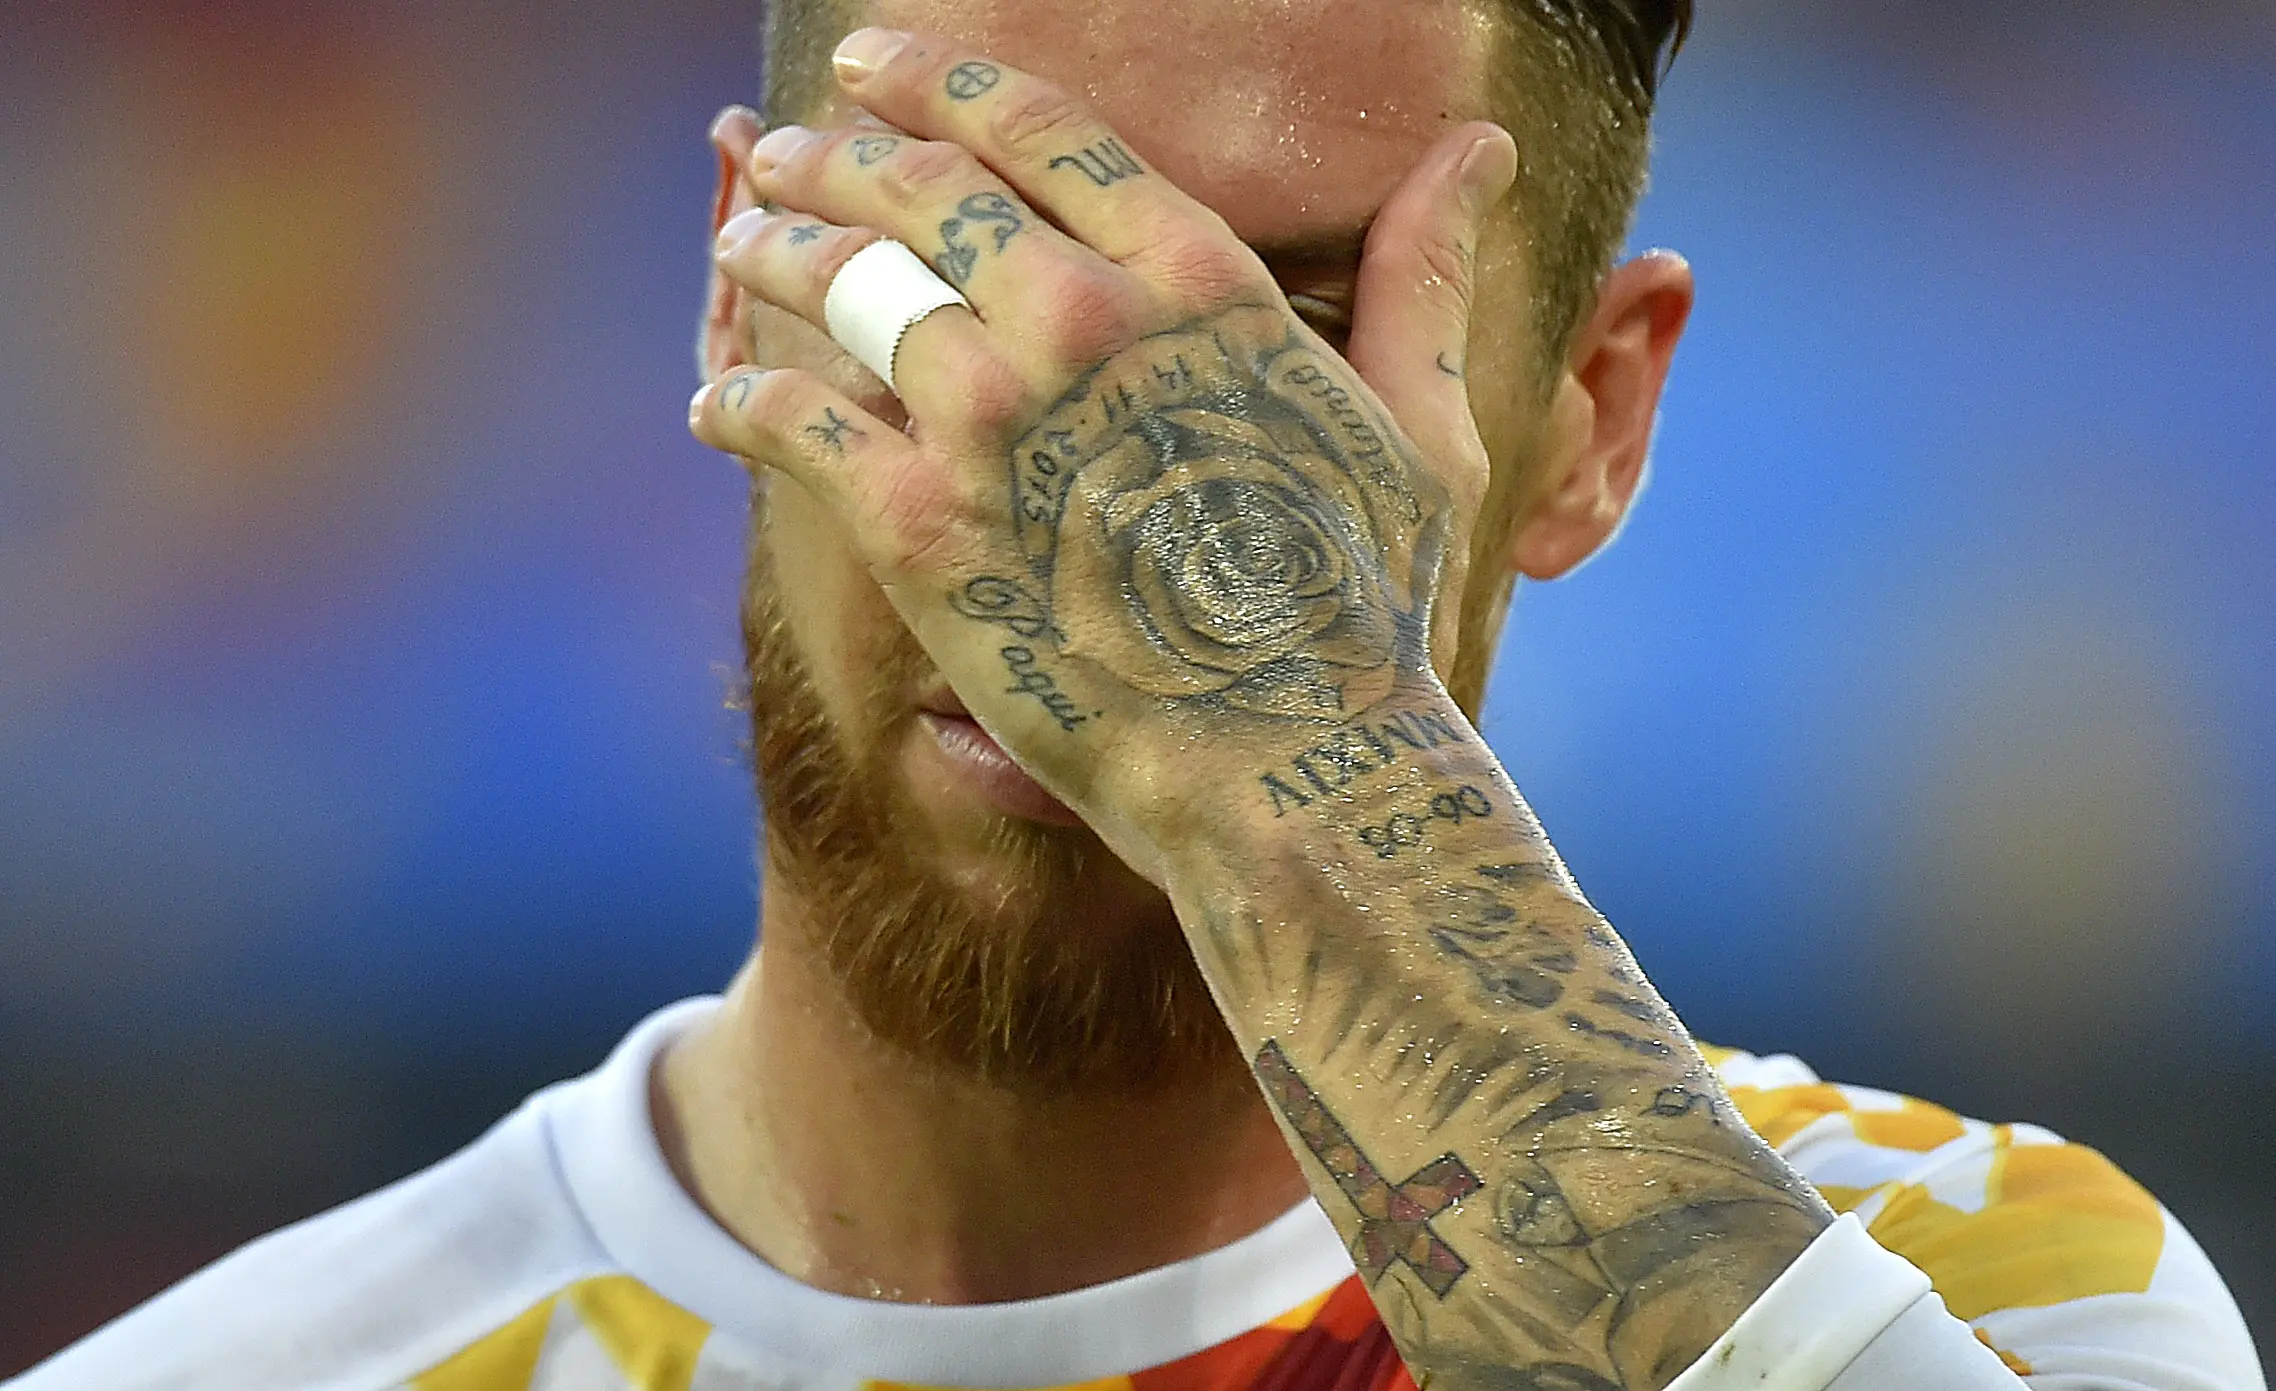 Pemain Spanyol, Sergio Ramos memiliki tato mawar dan nama ayahnya (Paqui) serta salib ditangan kirinya saat berlaga pada grup D Euro Cup 2016 melawan Kroasia di Stadion Matmut Atlantique, Bordeaux, (22/6/2016). (AFP/Loic Venance)